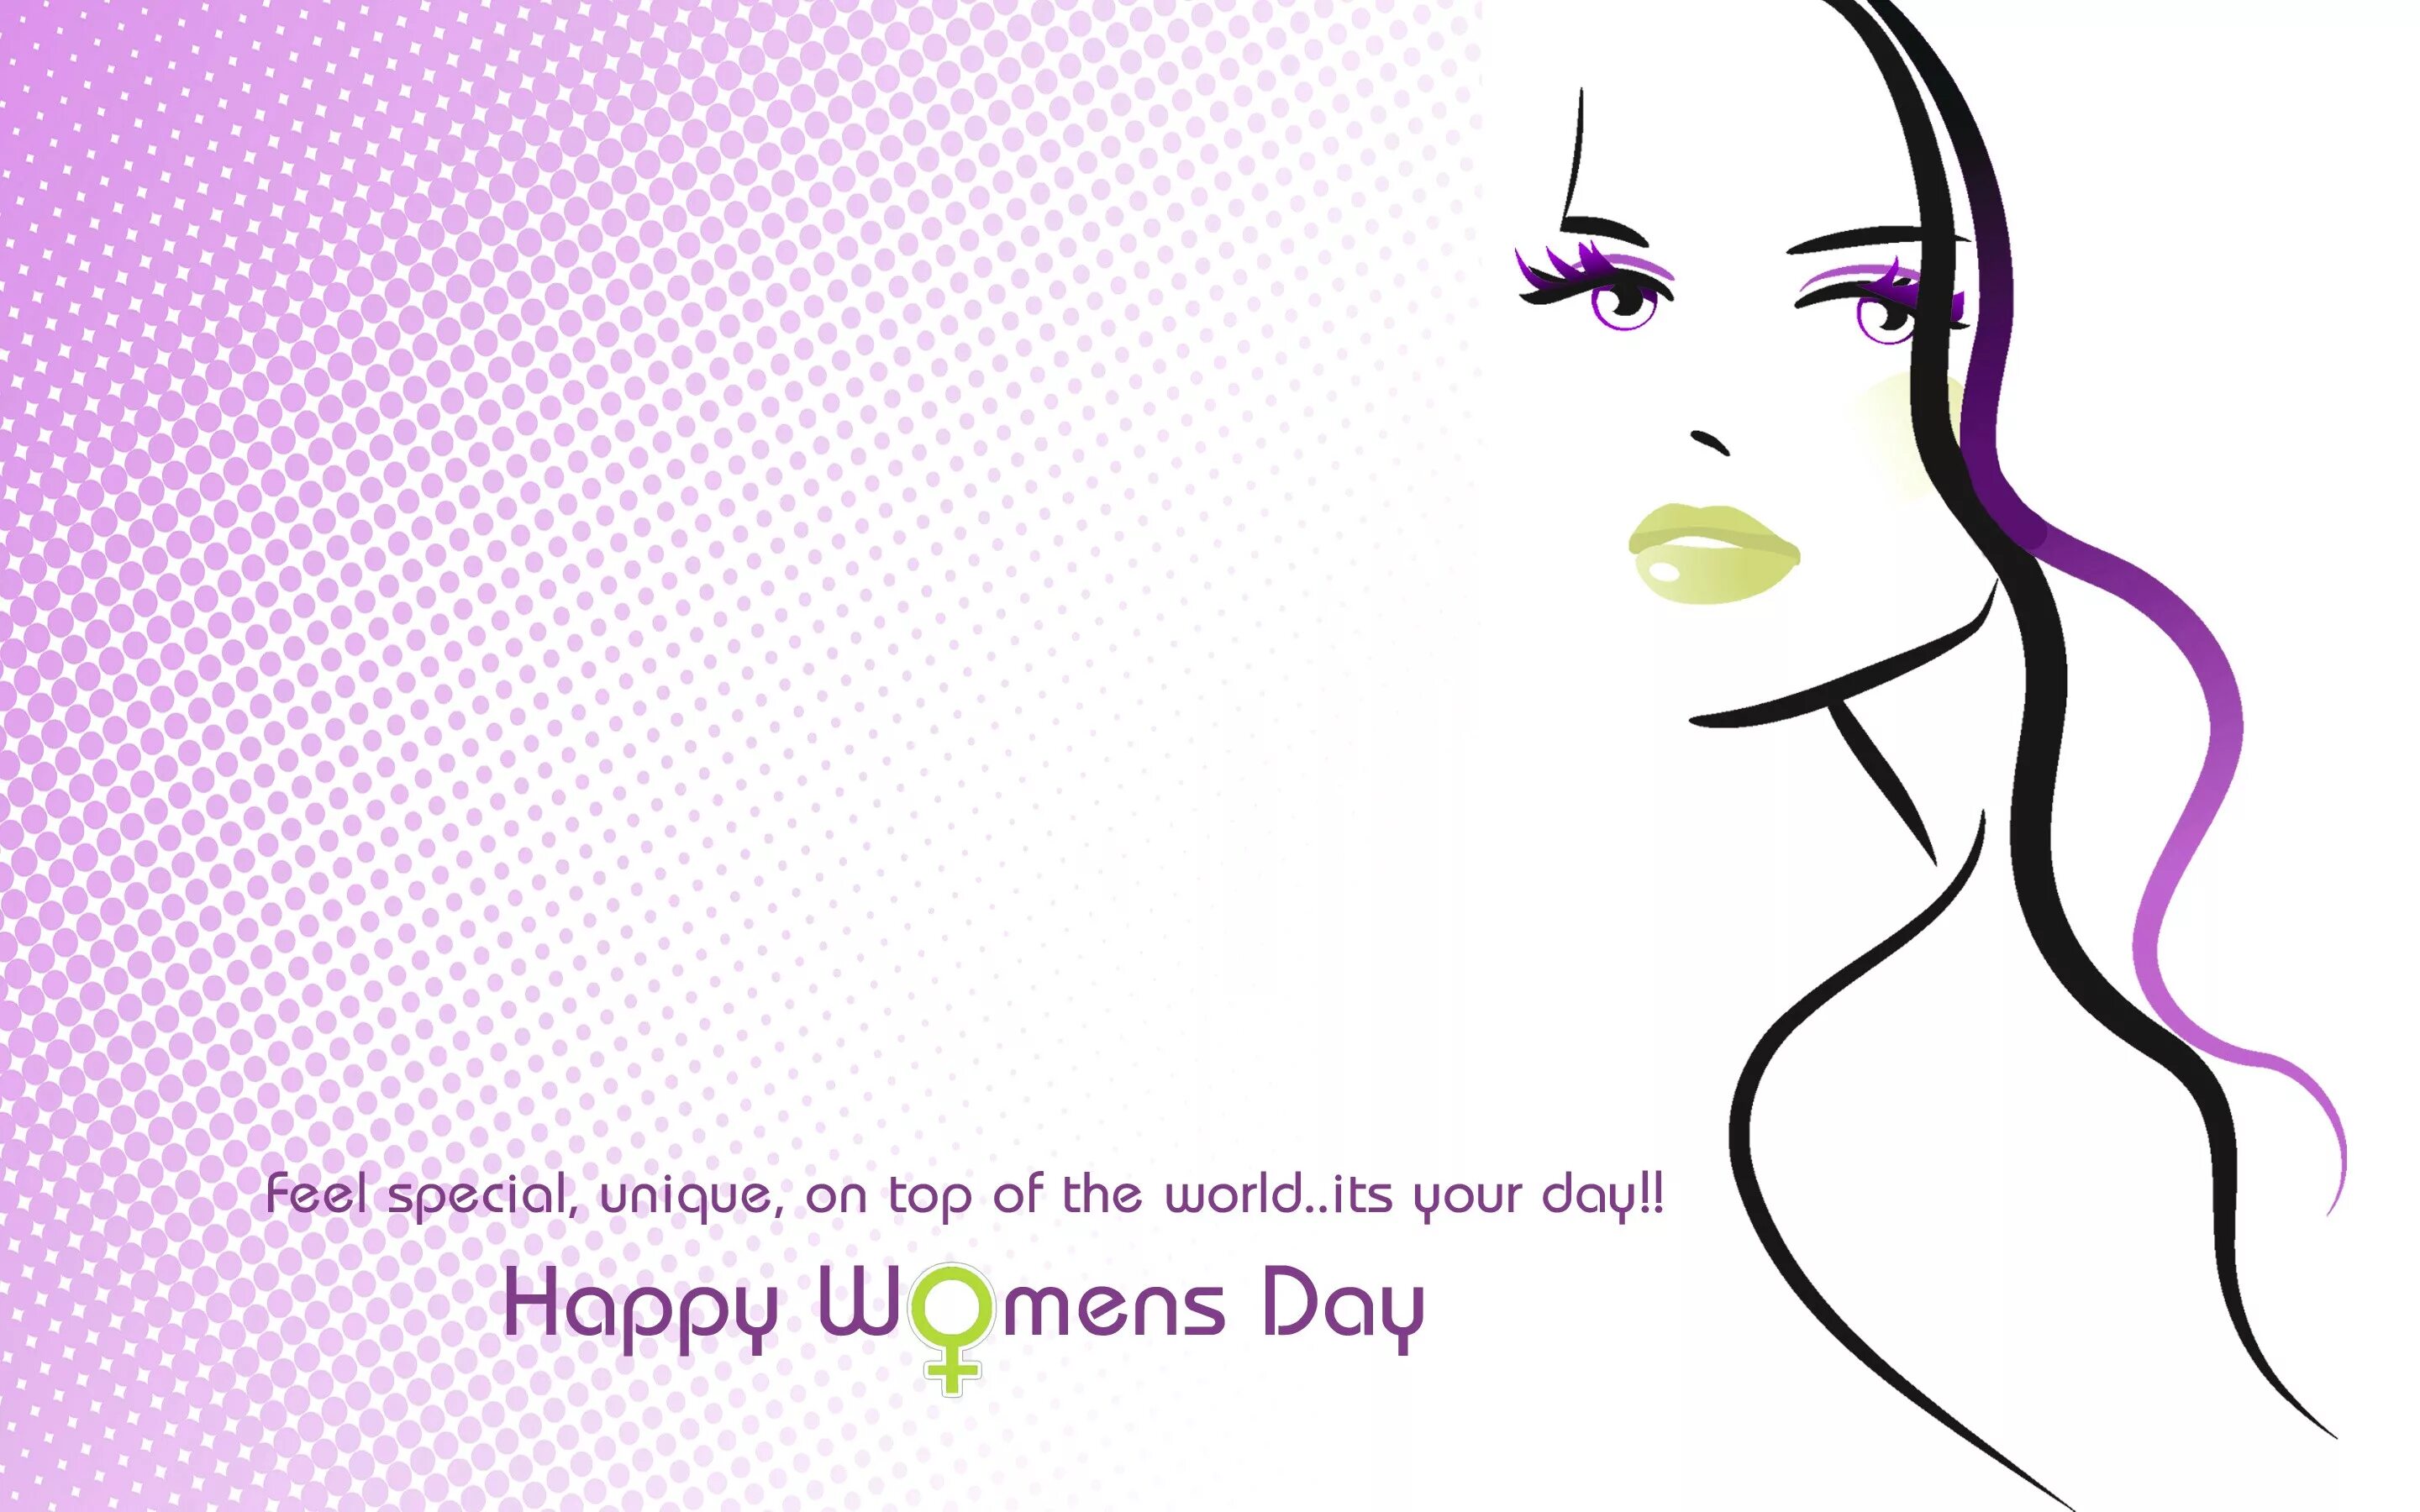 World women day. Happy women's Day. International women's Day фон. March 8th International women's Day. Happy women's Day 8 March.